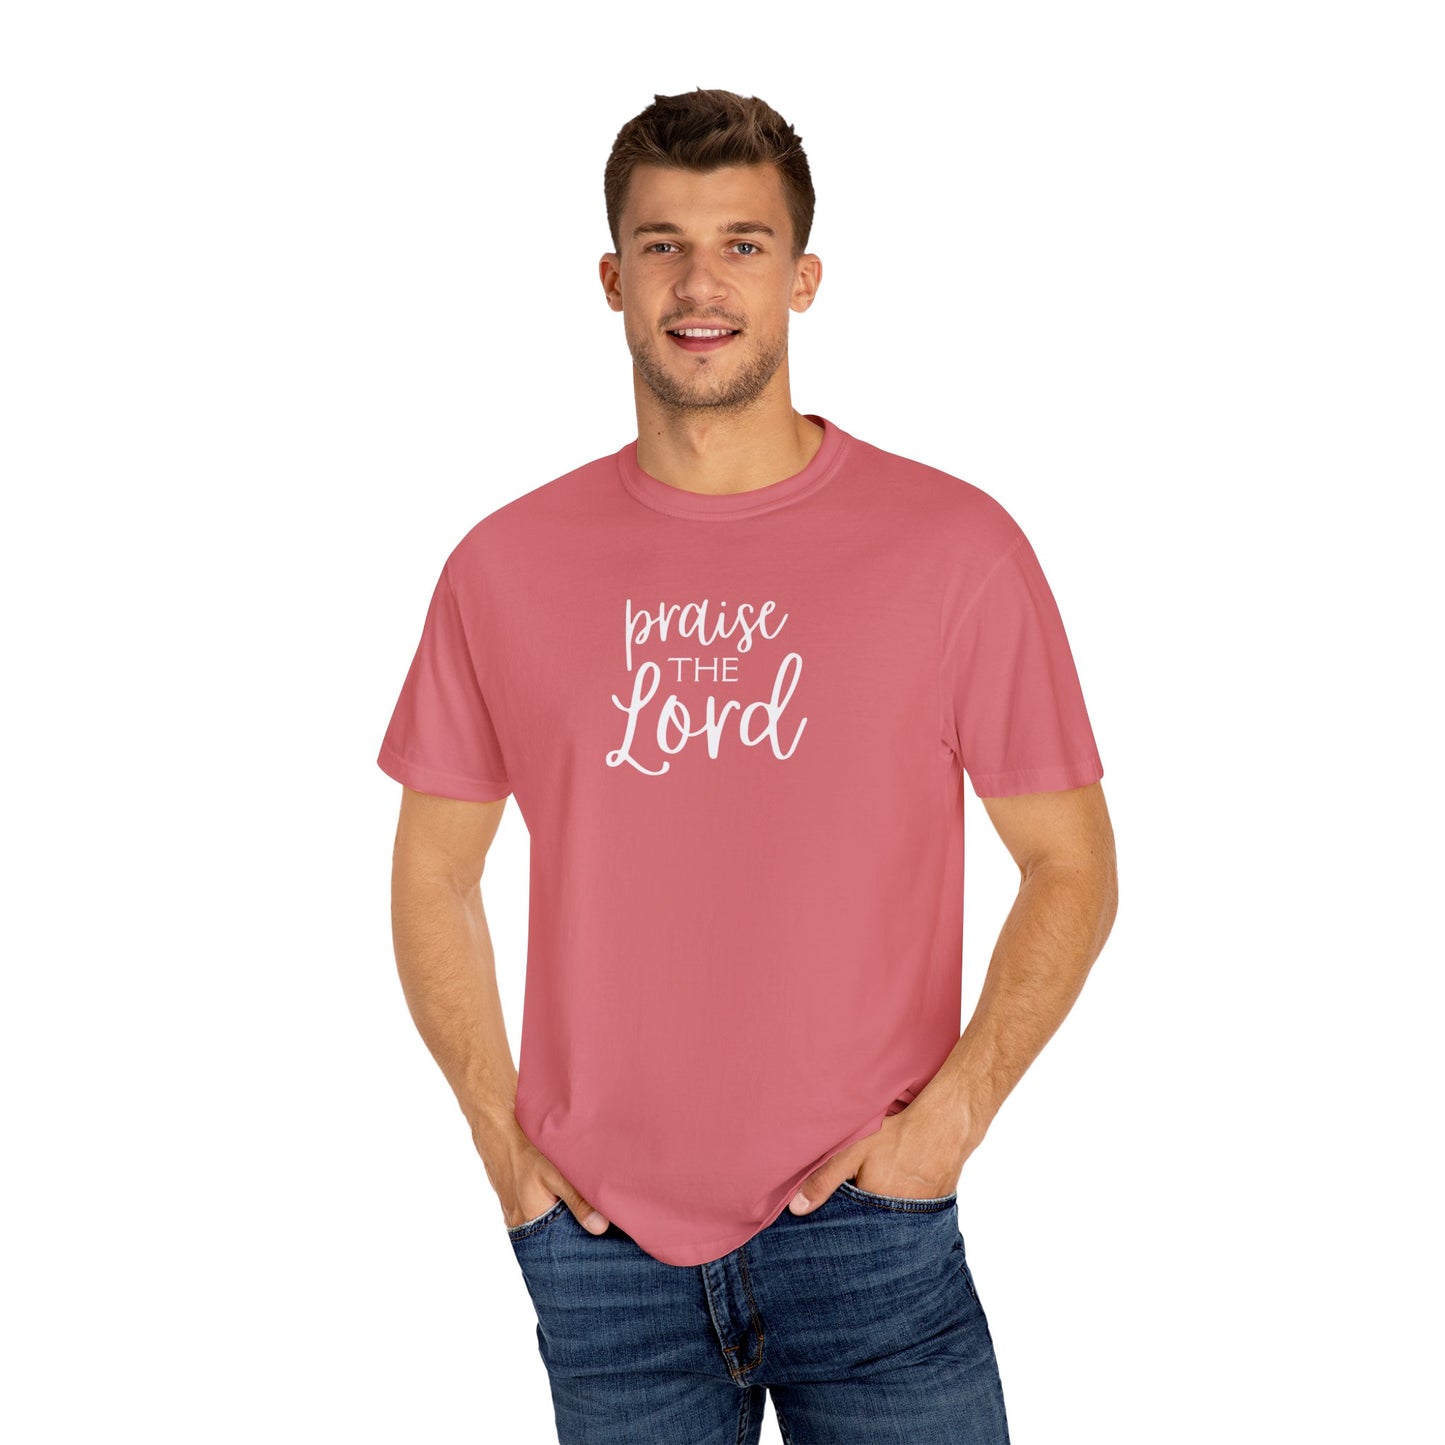 Praise The Lord T-shirt, Women's Faith Based Tee